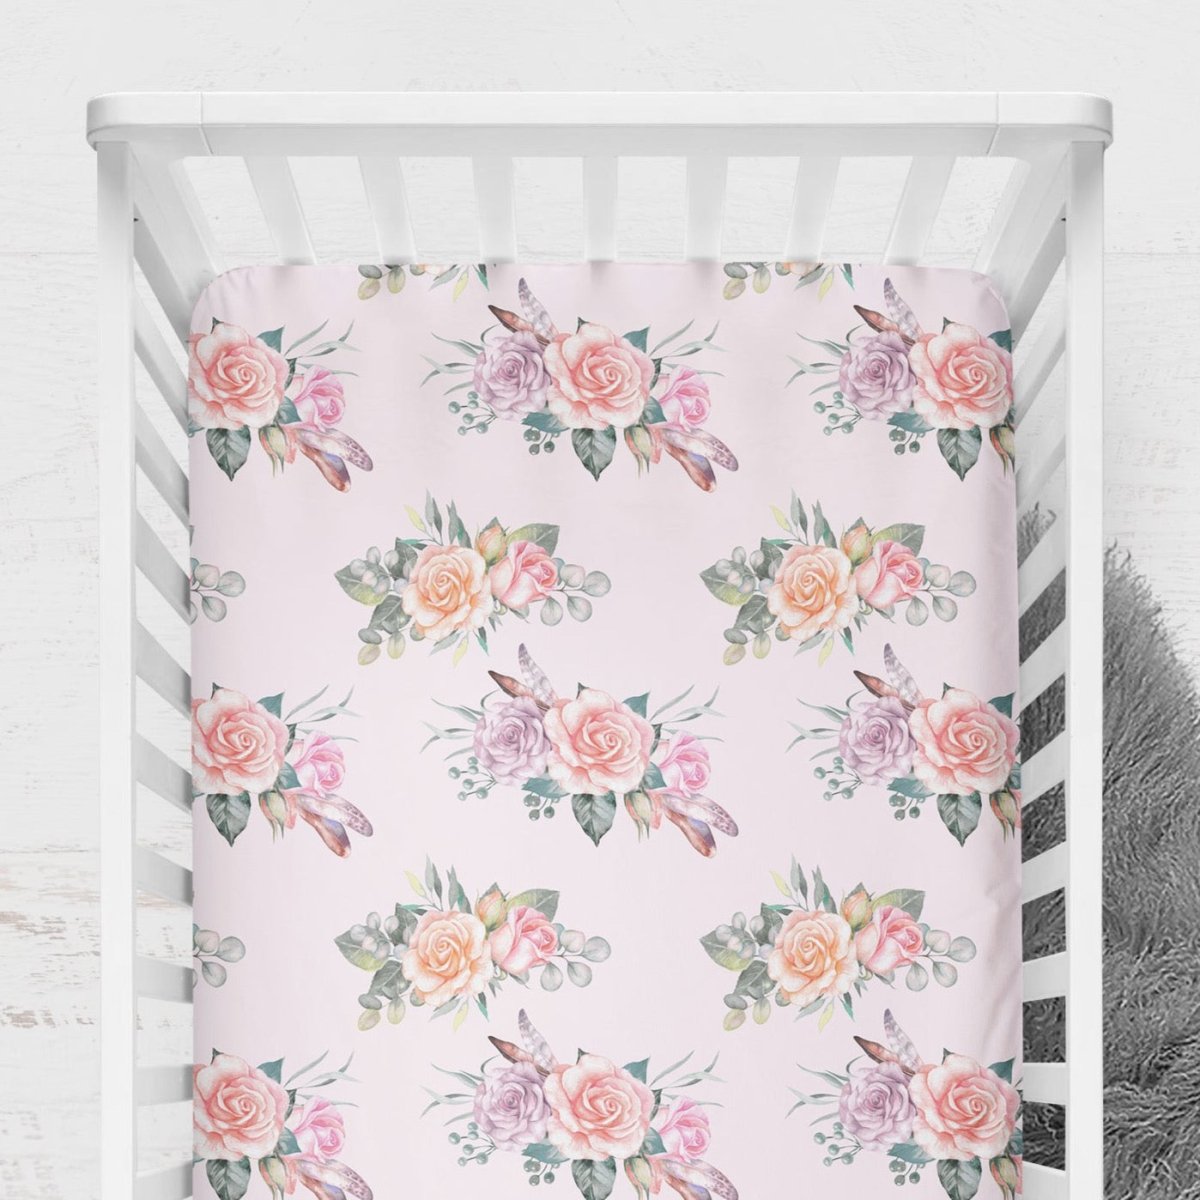 Floral Cowgirl Crib Sheet - gender_girl, Theme_Floral, Theme_Southwestern